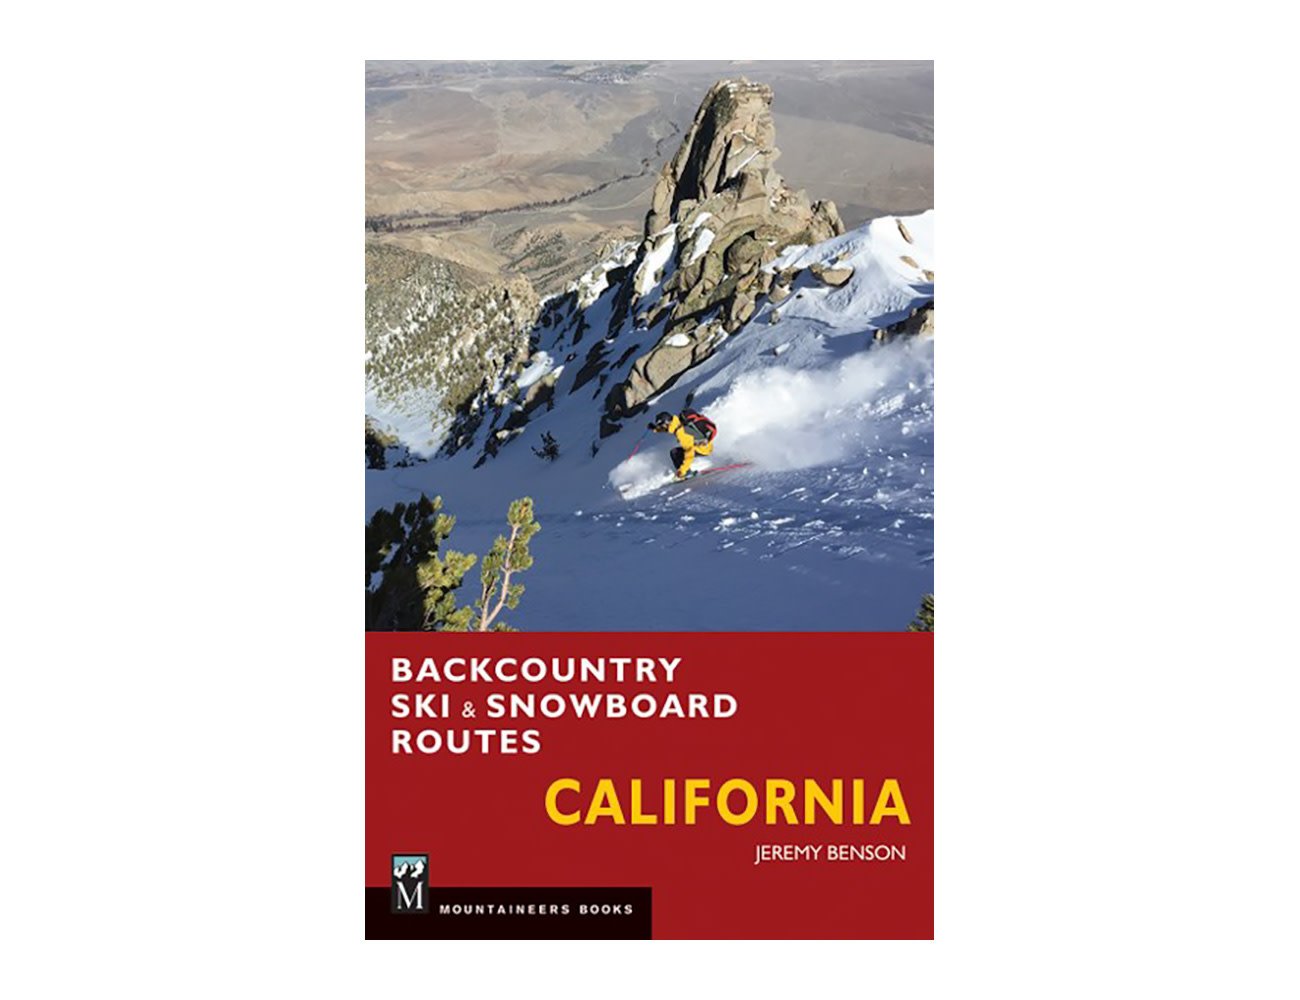 Backcountry Ski & Snowboard Routes California